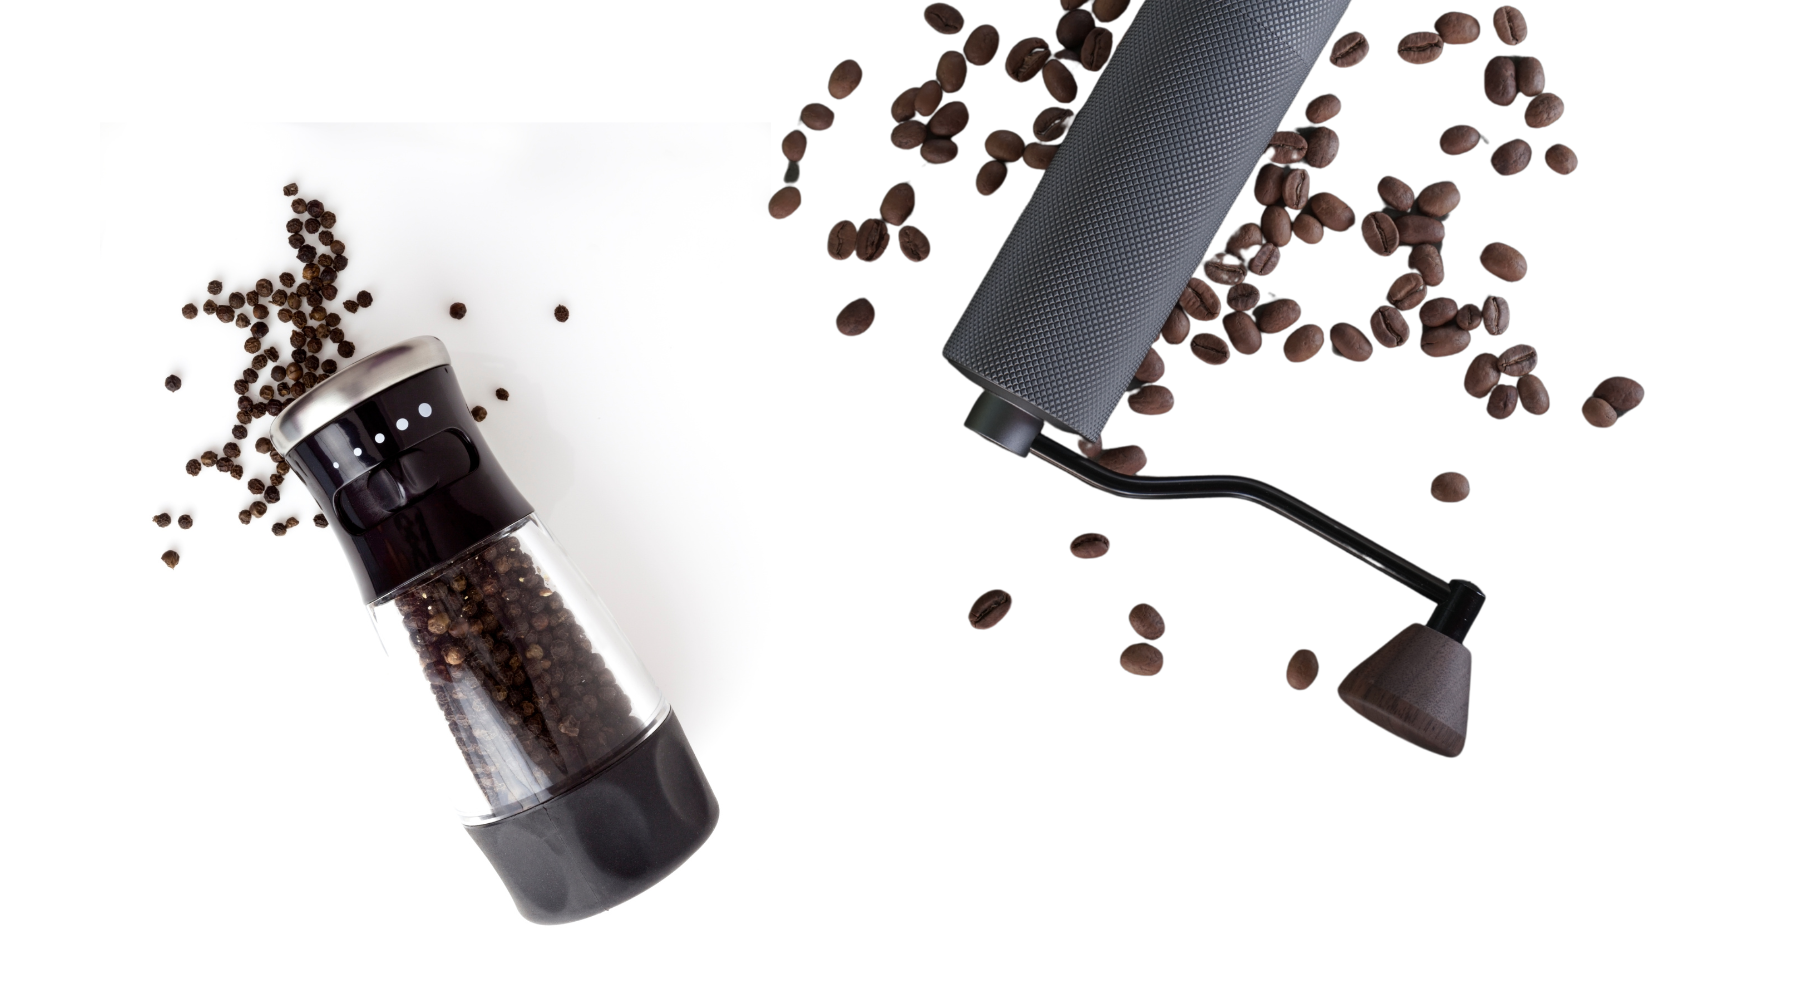 spice grinder vs coffee grinder